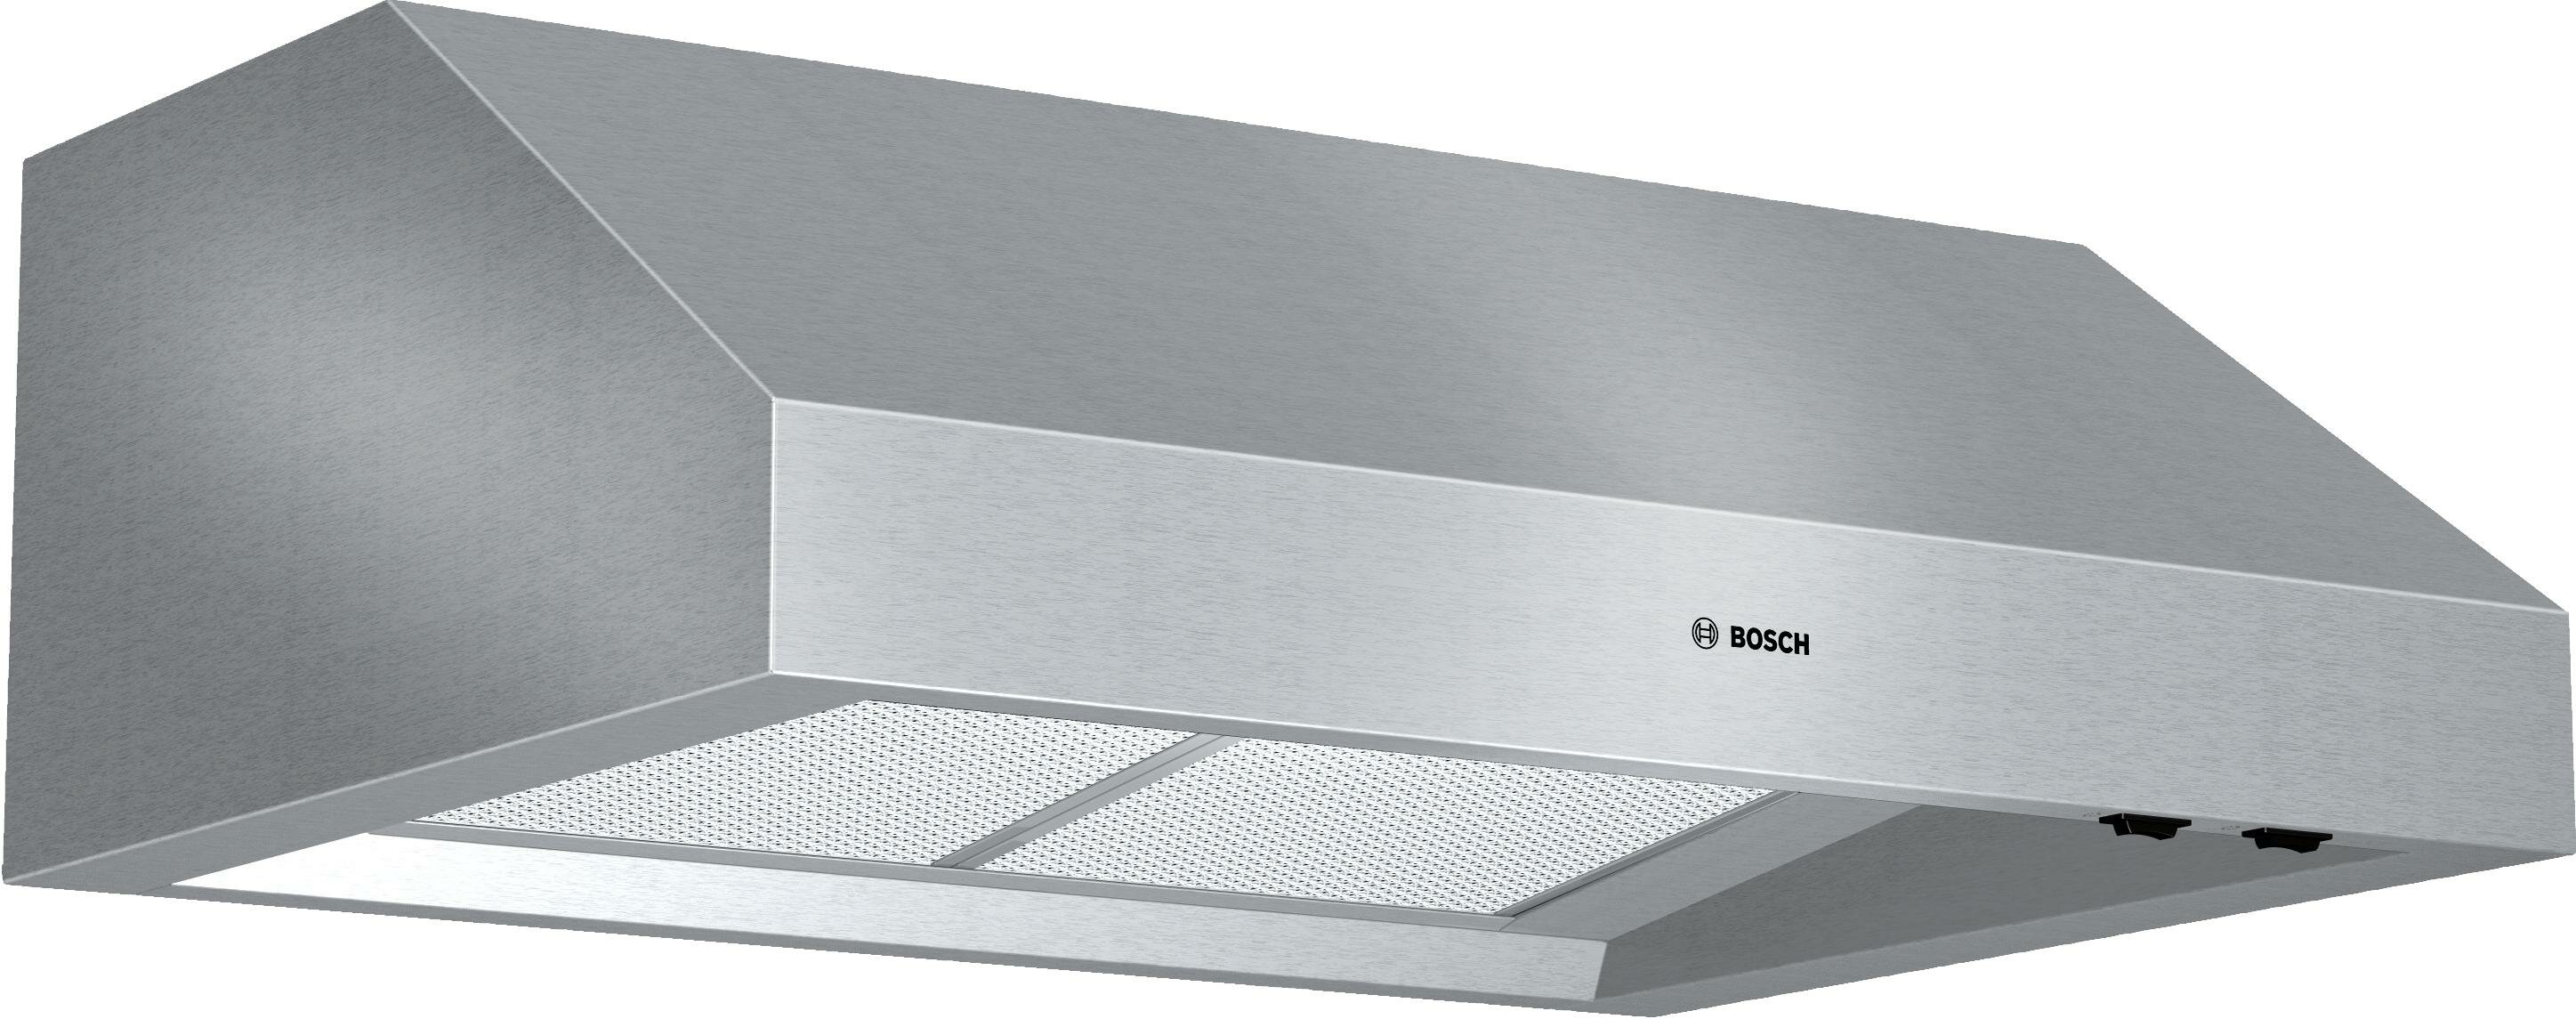 Bosch 30 800 Series 600 CFM Convertible Under Cabinet Range Hood in  Stainless Steel & Reviews